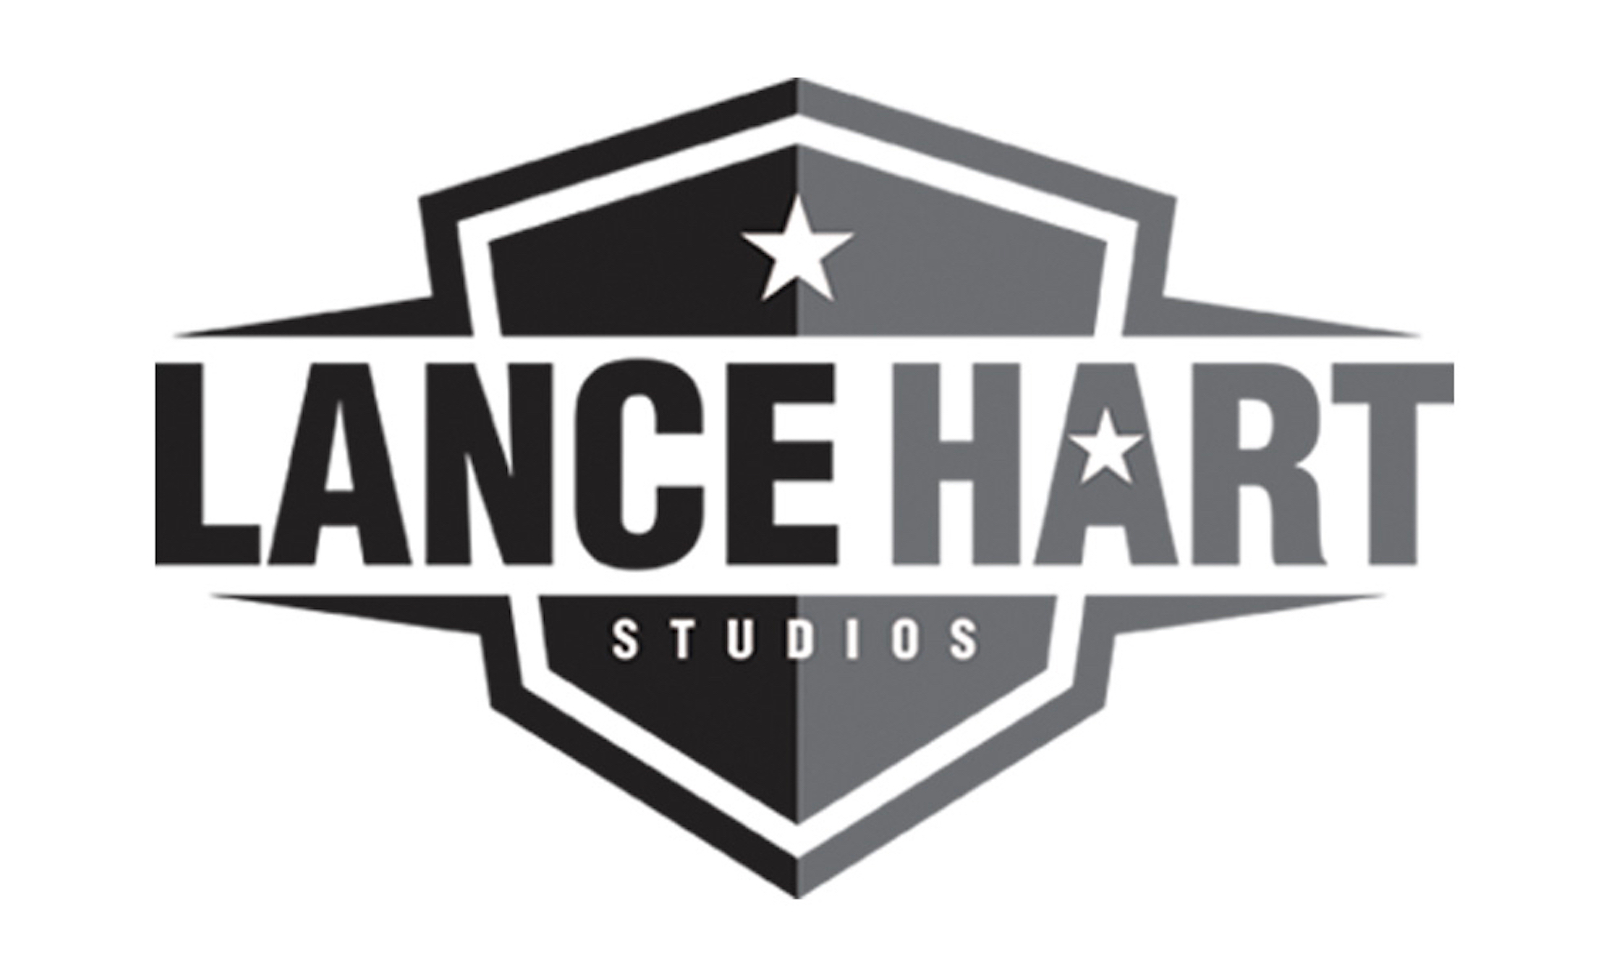 Lance Hart Studios Inks Deal With Joy Media Group